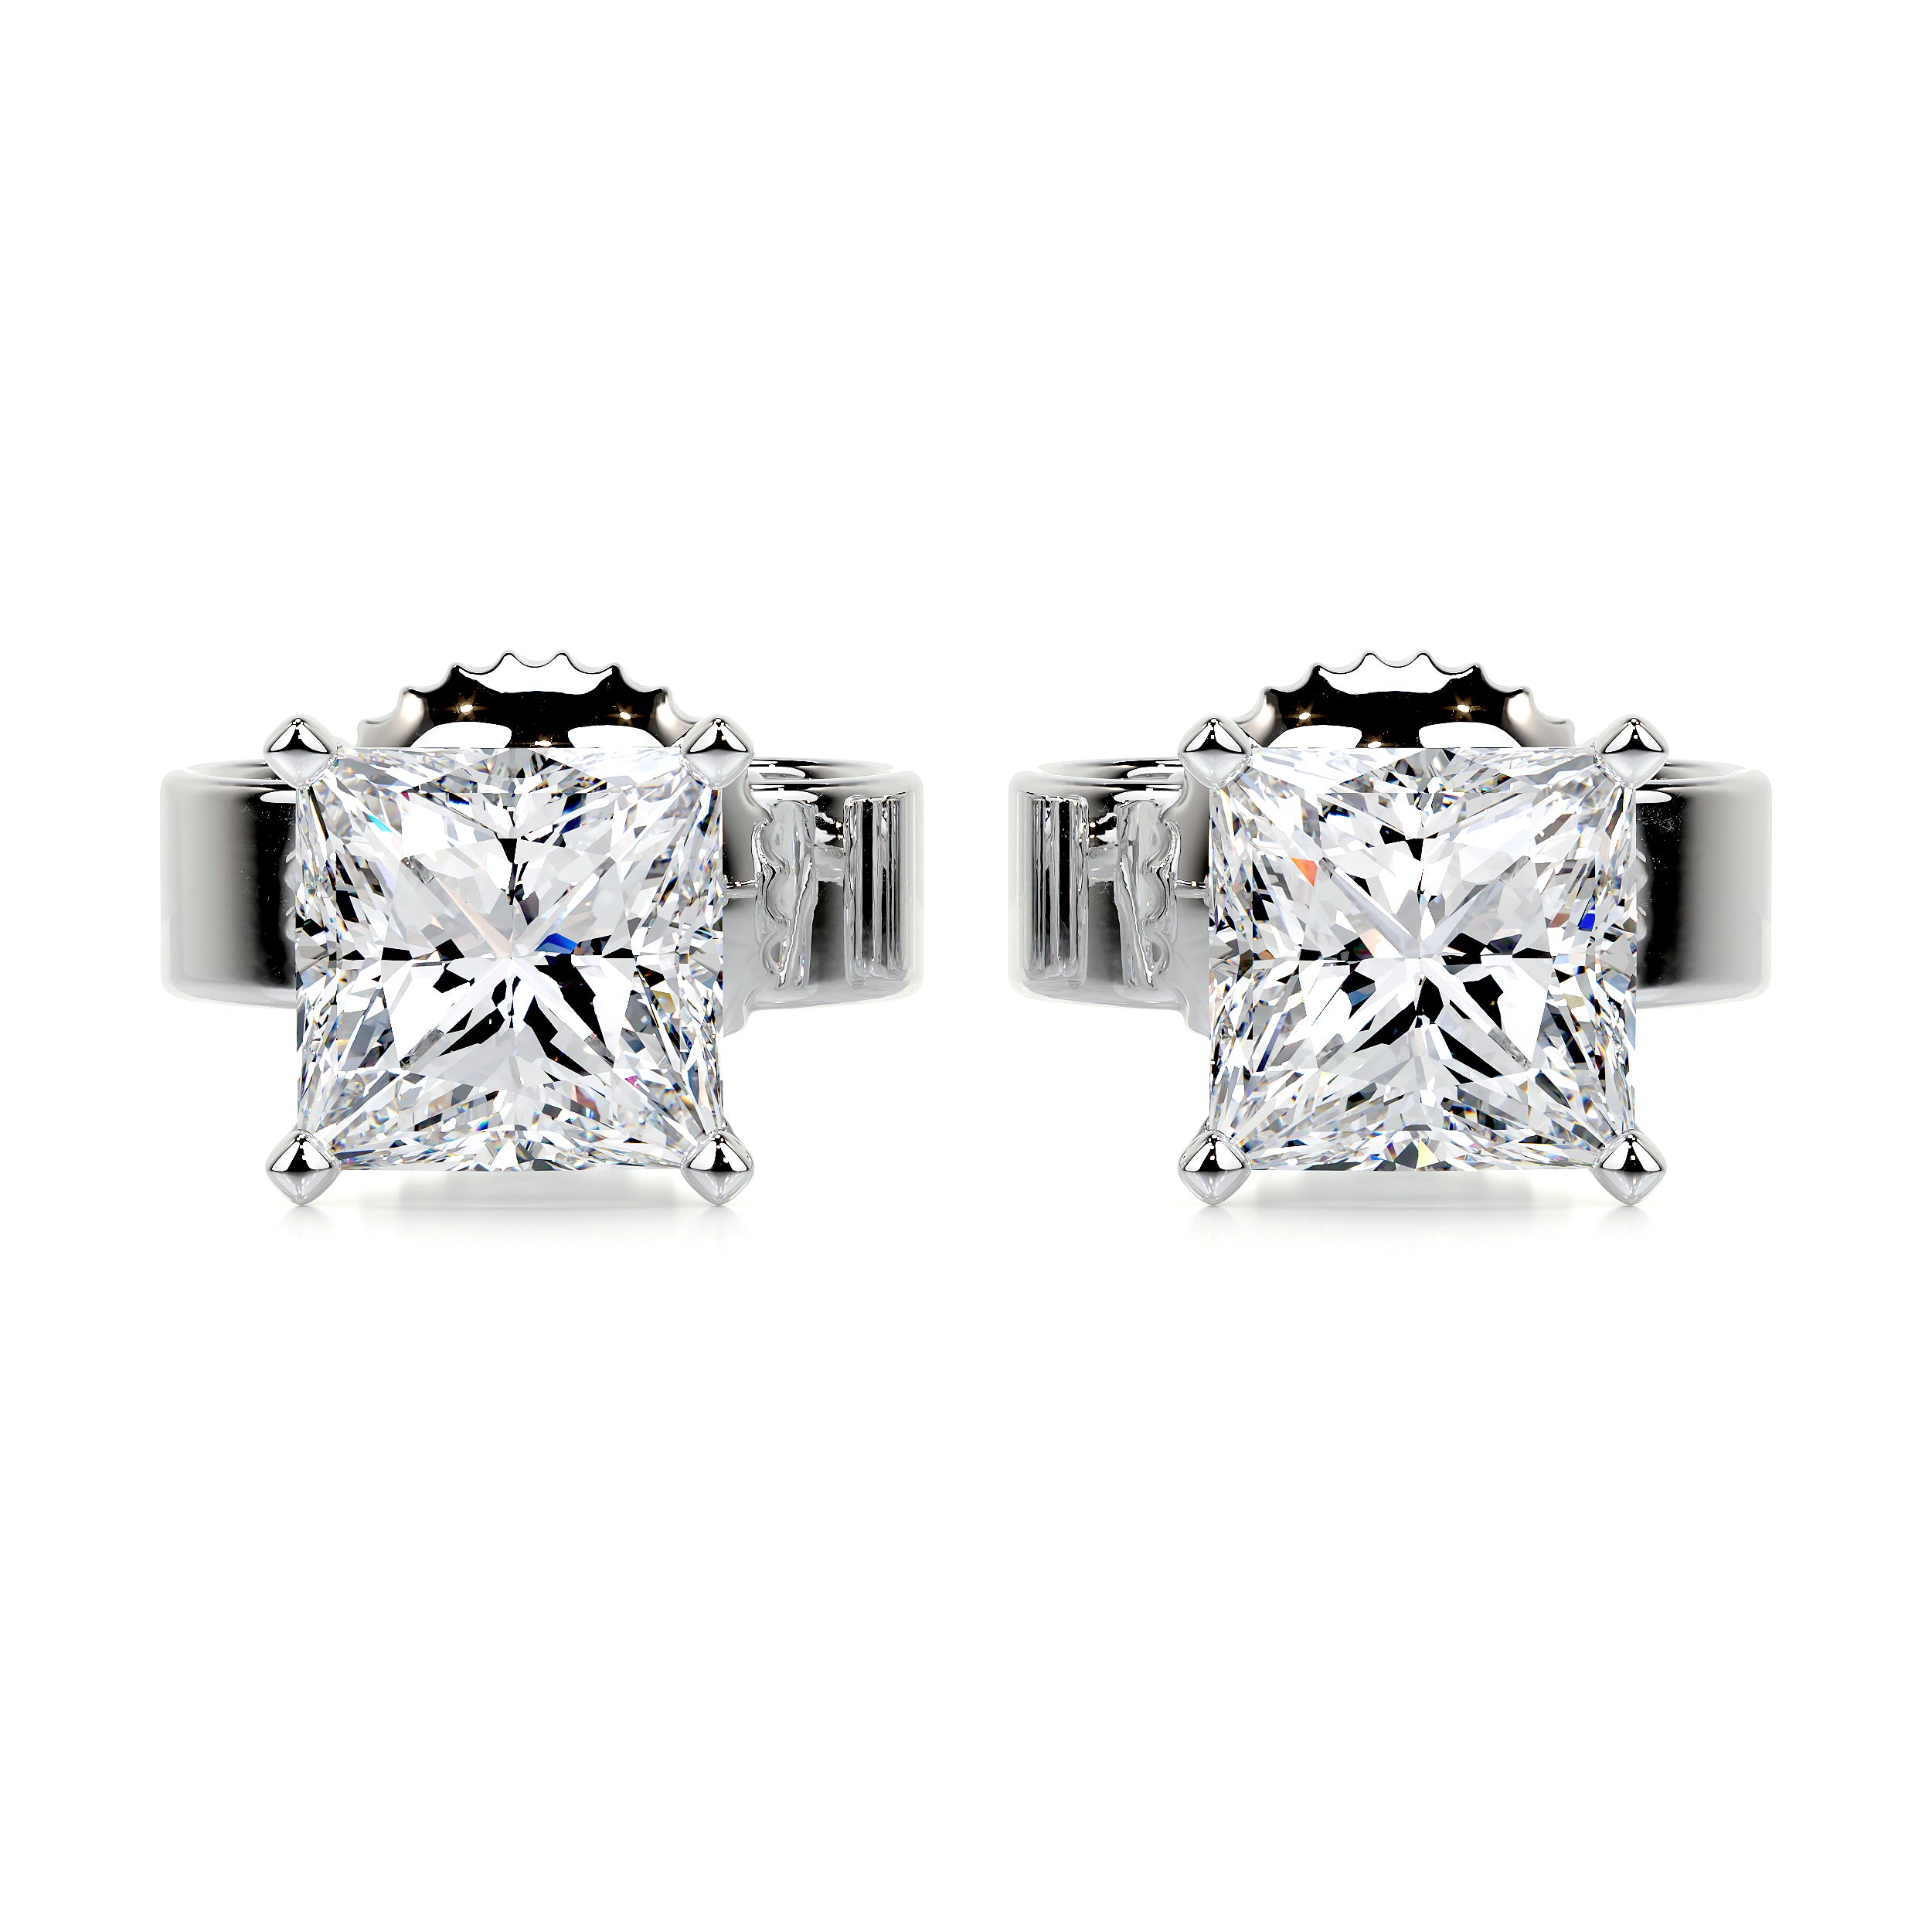 Jamie Diamond Earrings   (3 Carat) -14K White Gold